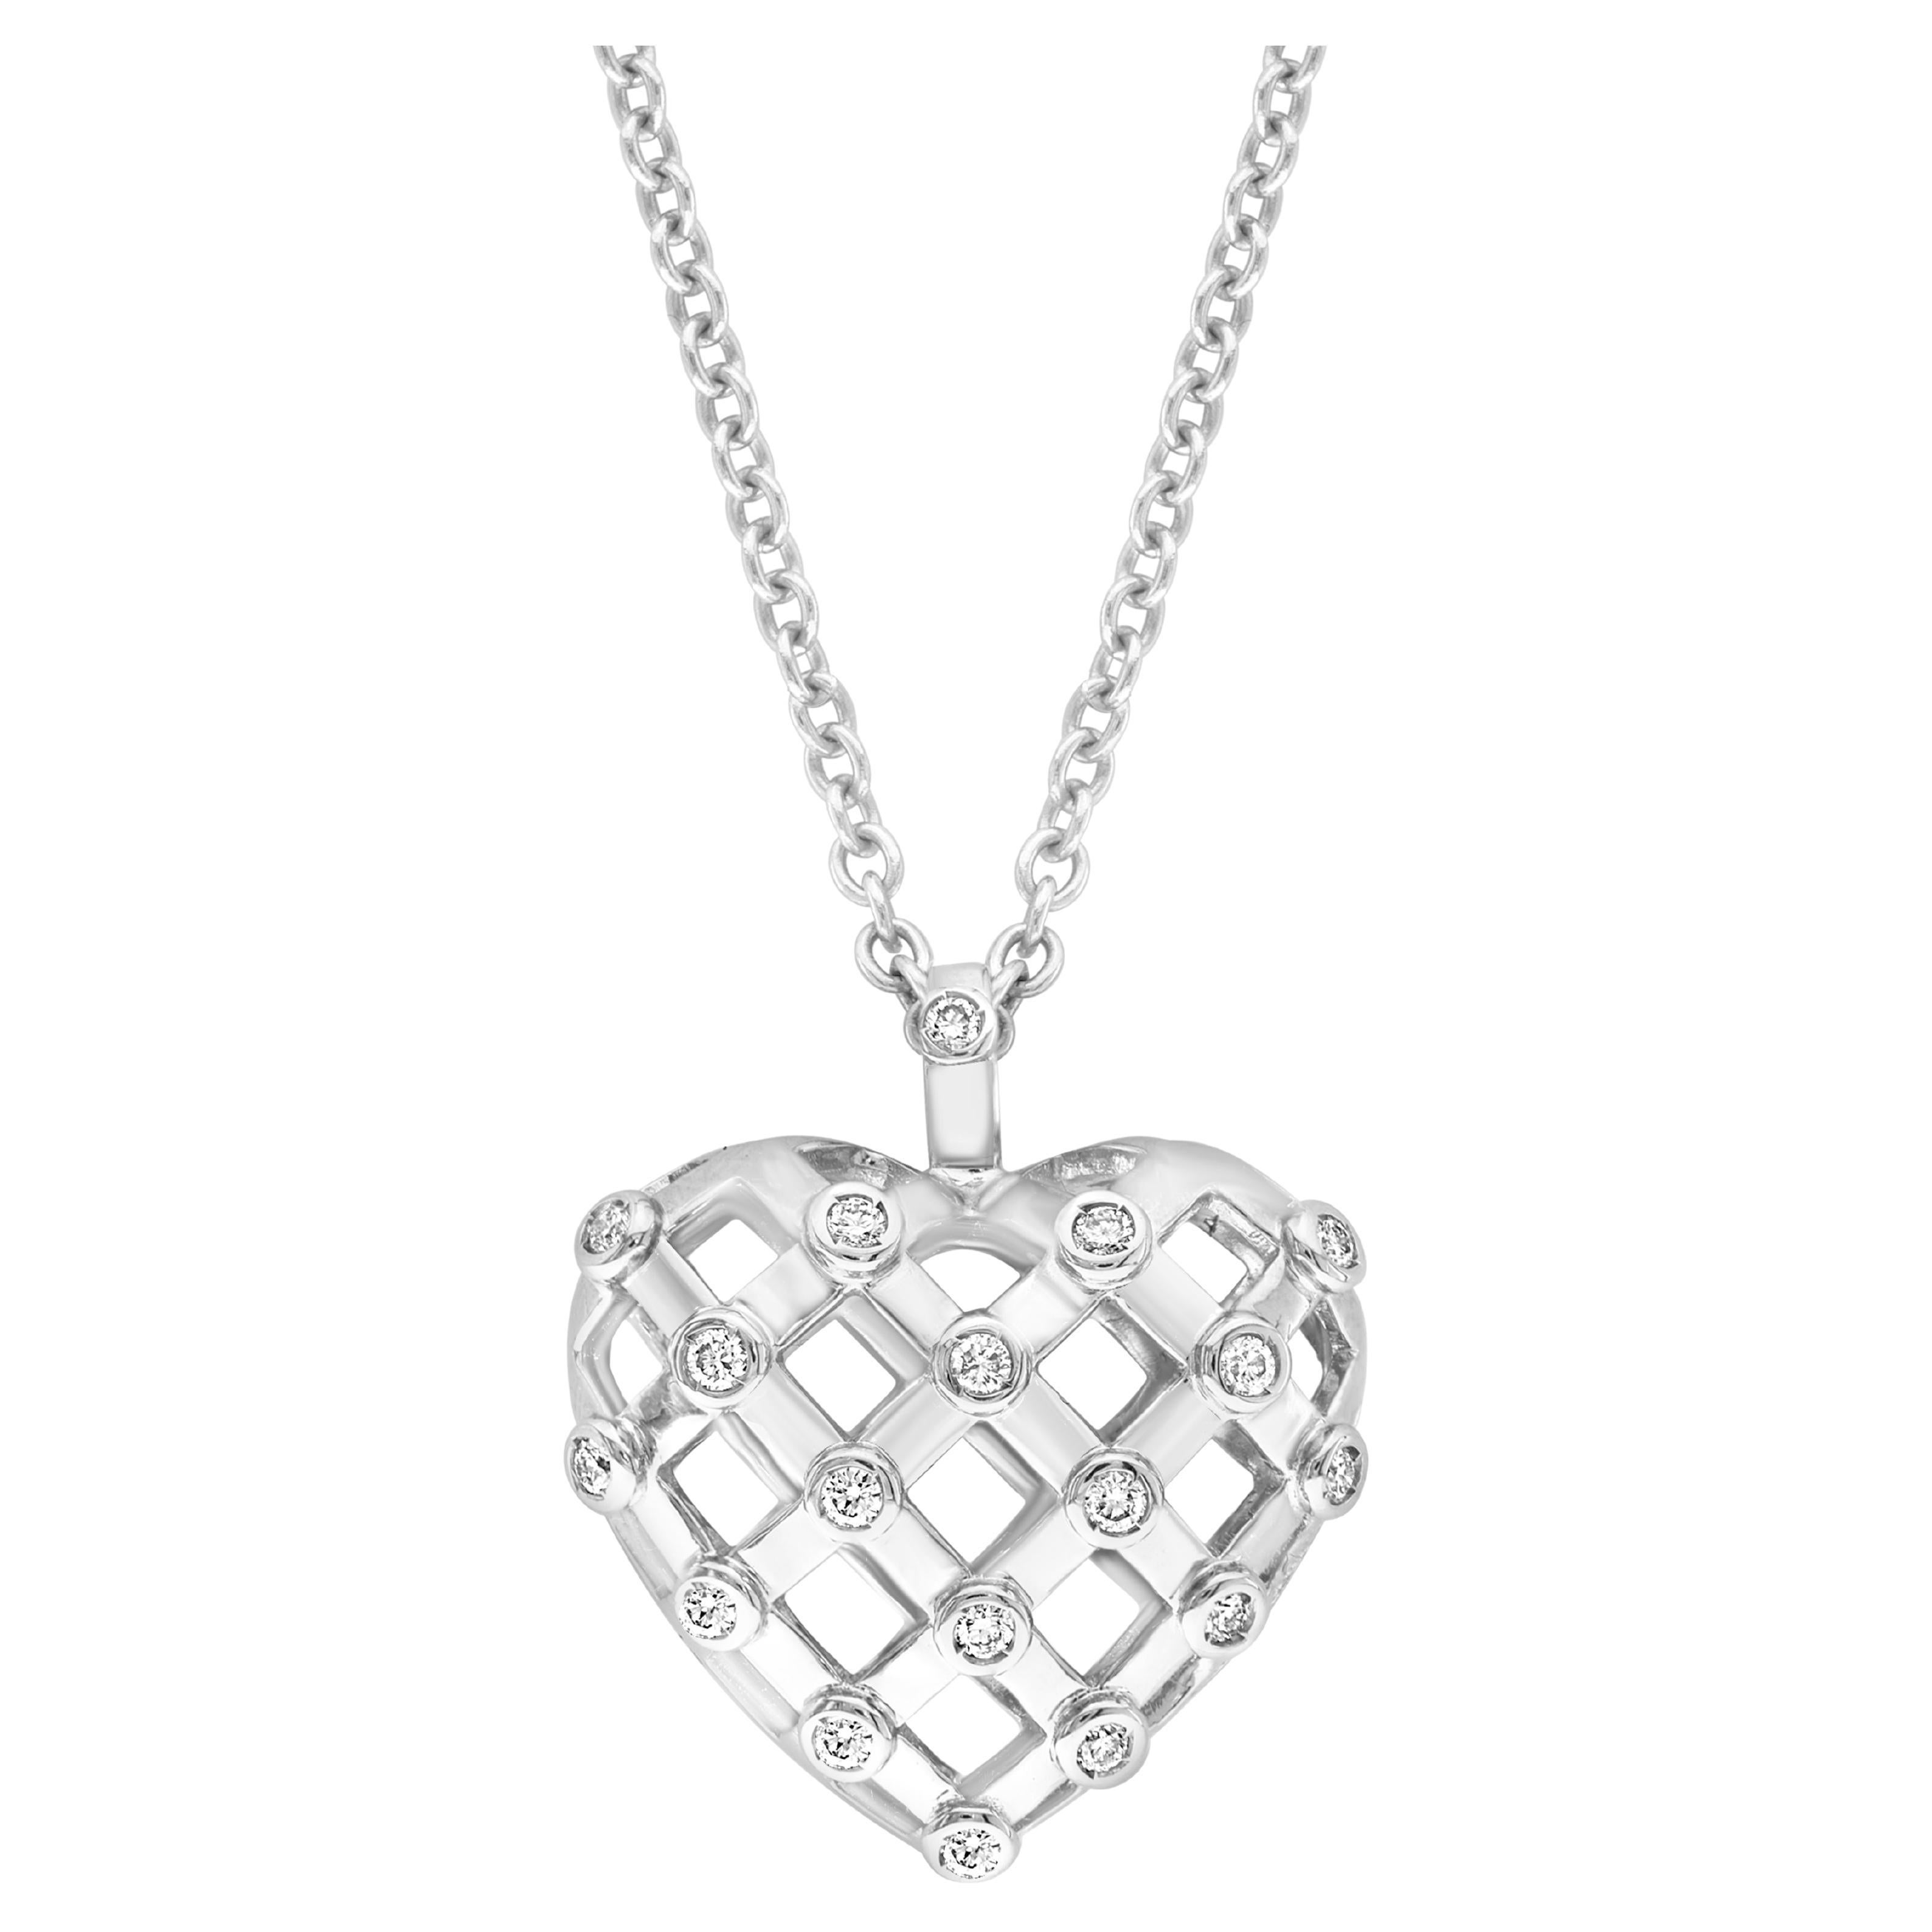 Tiffany & CO Heart Diamond Pendant Necklace 18K White Gold 0.50 CT 31" Long Chai